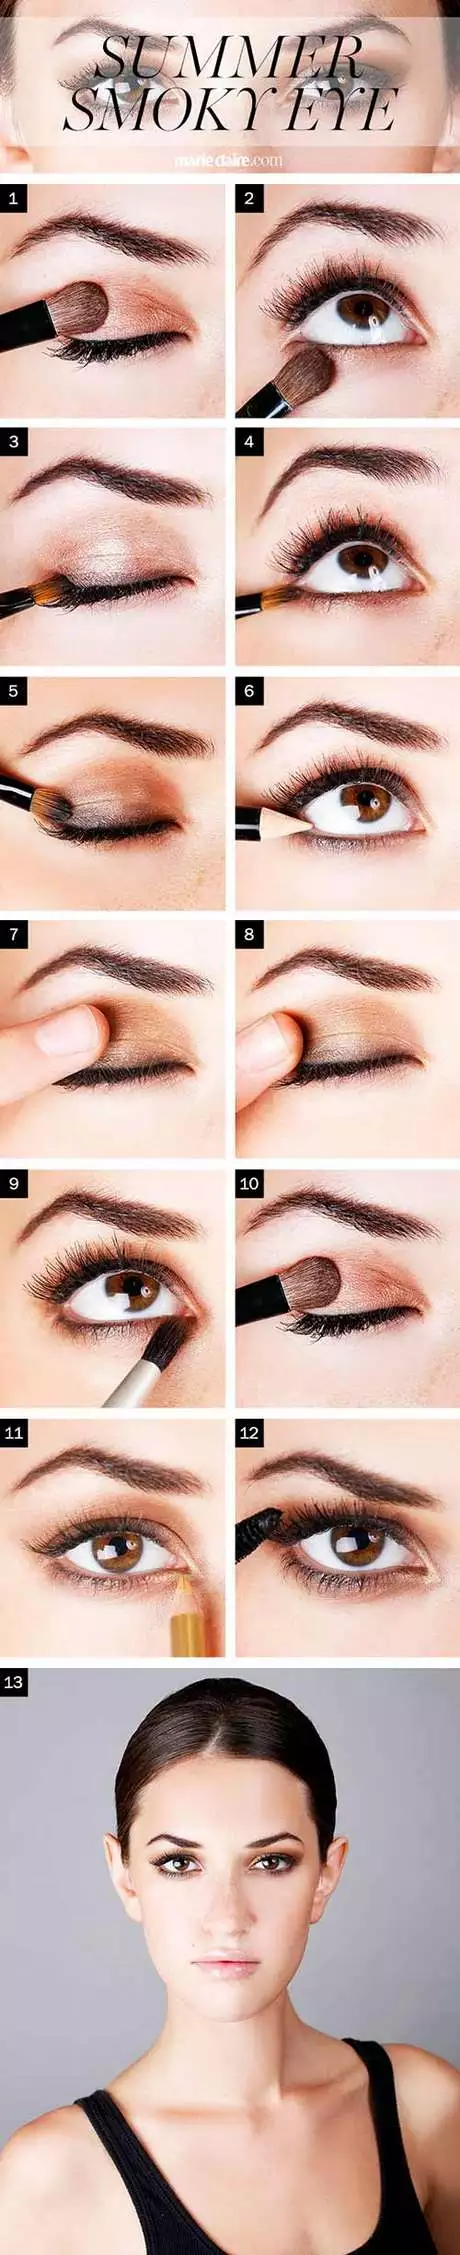 makeup-tutorial-light-smokey-eyes-11_5-14 Make-up tutorial licht smokey eyes